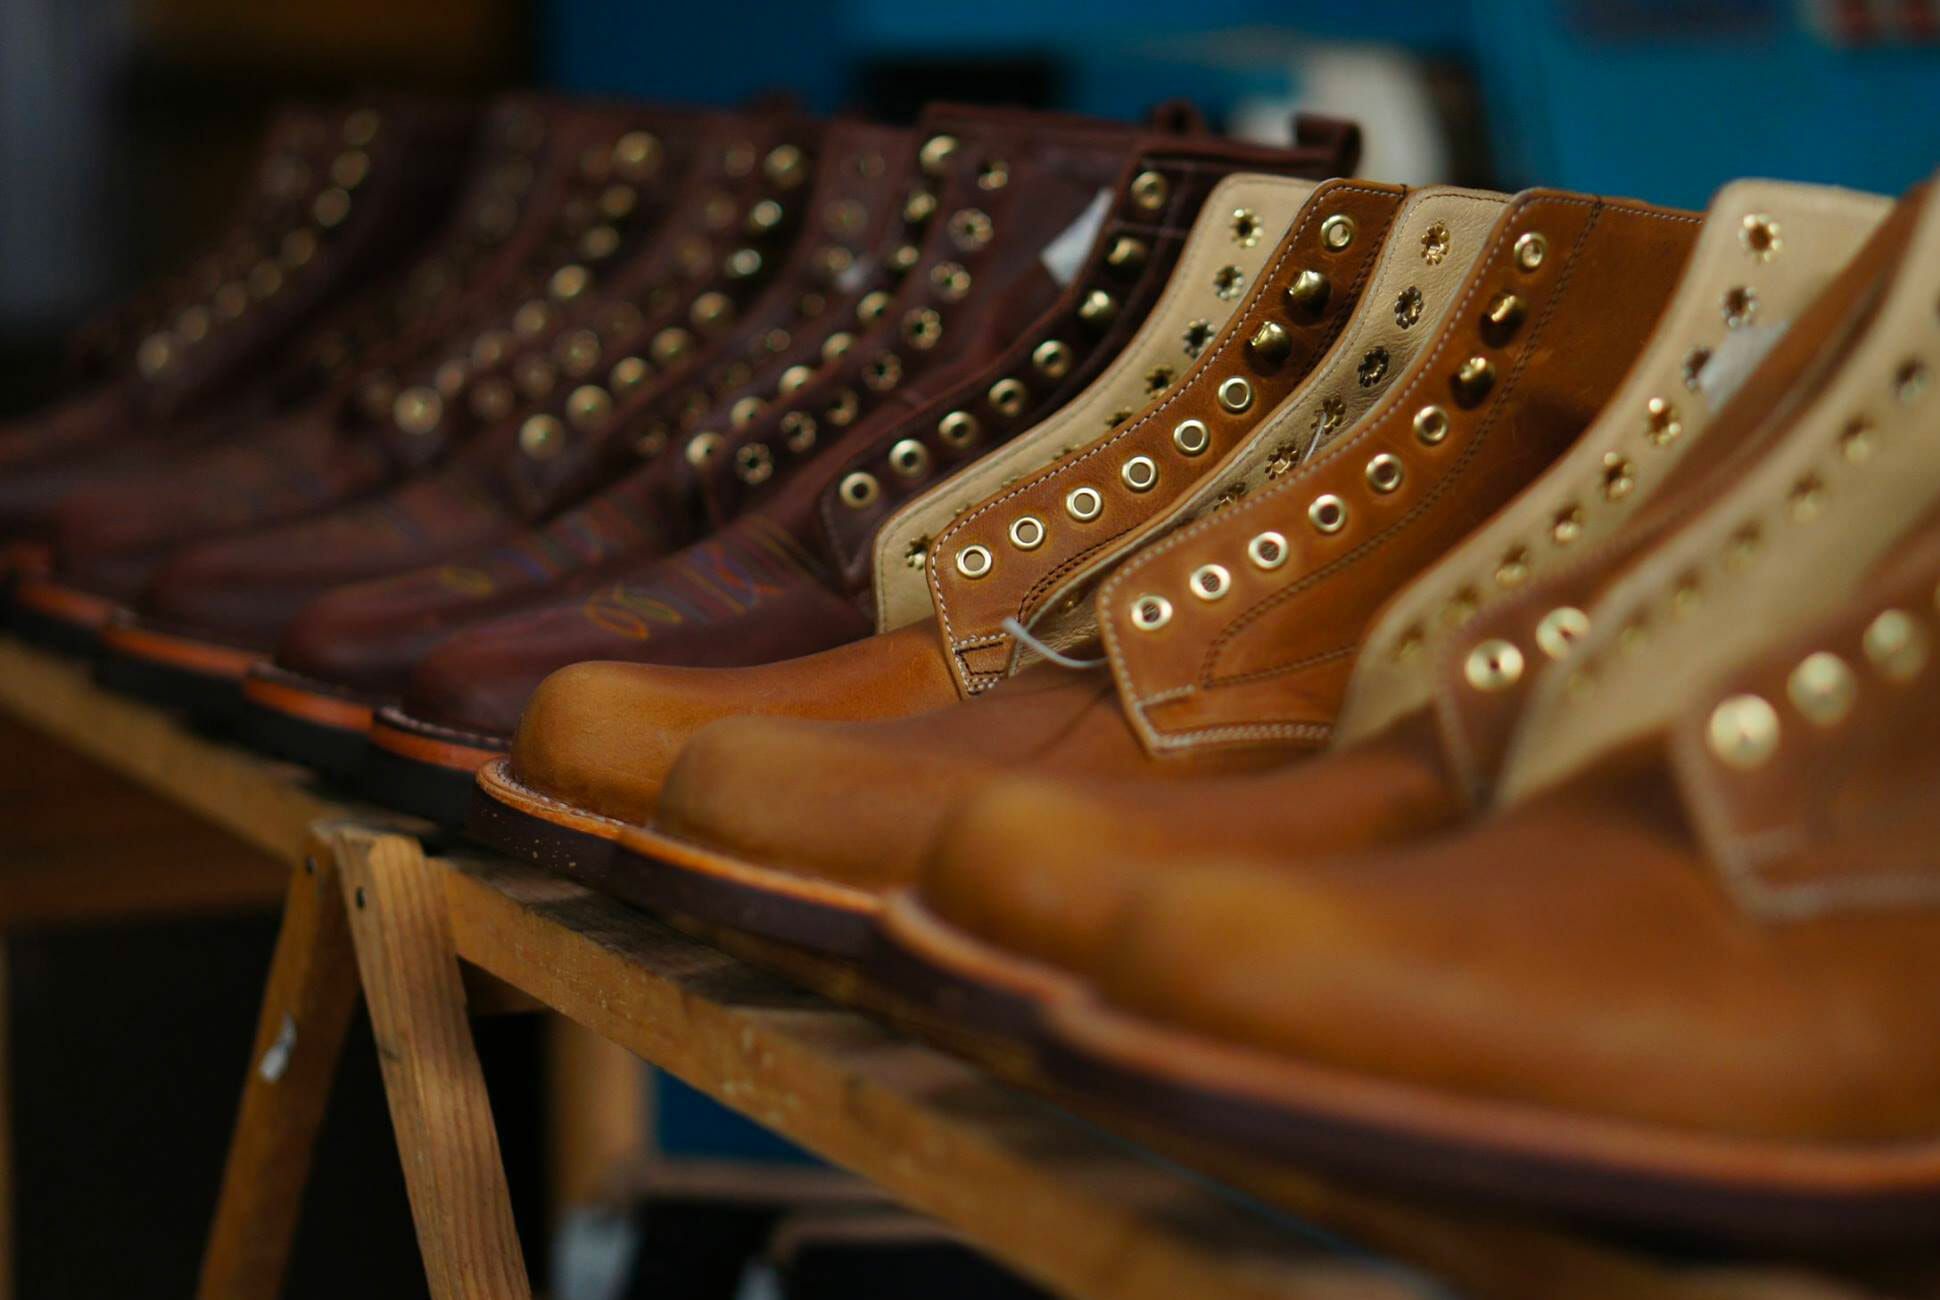 Mexican Handmade Boot